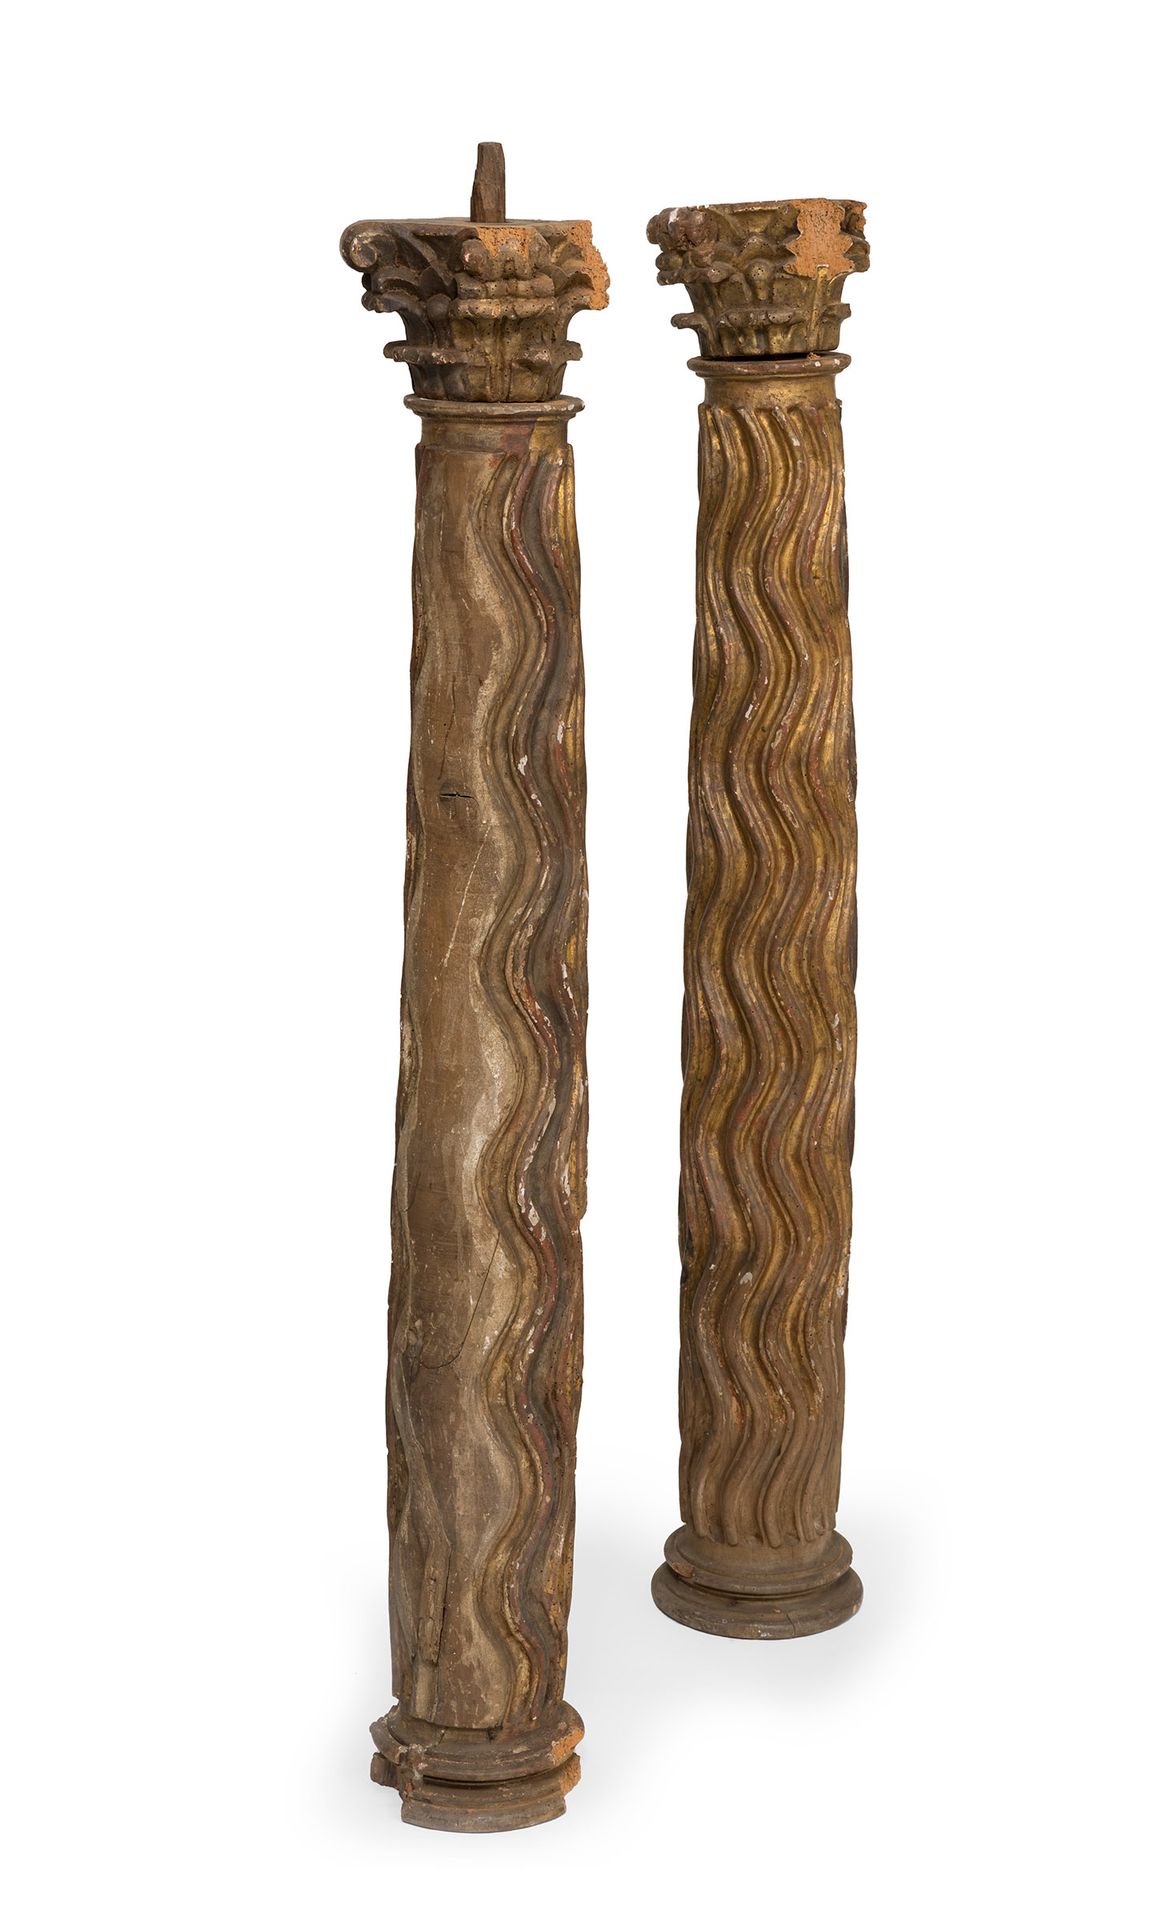 Null 一对柱子。西班牙，17世纪。
木雕，有镀金的痕迹。
雕刻有重要的缺陷，有活体木琴和损失。
尺寸。125 x 20 x 20厘米。
一对雕花木柱。有一个&hellip;